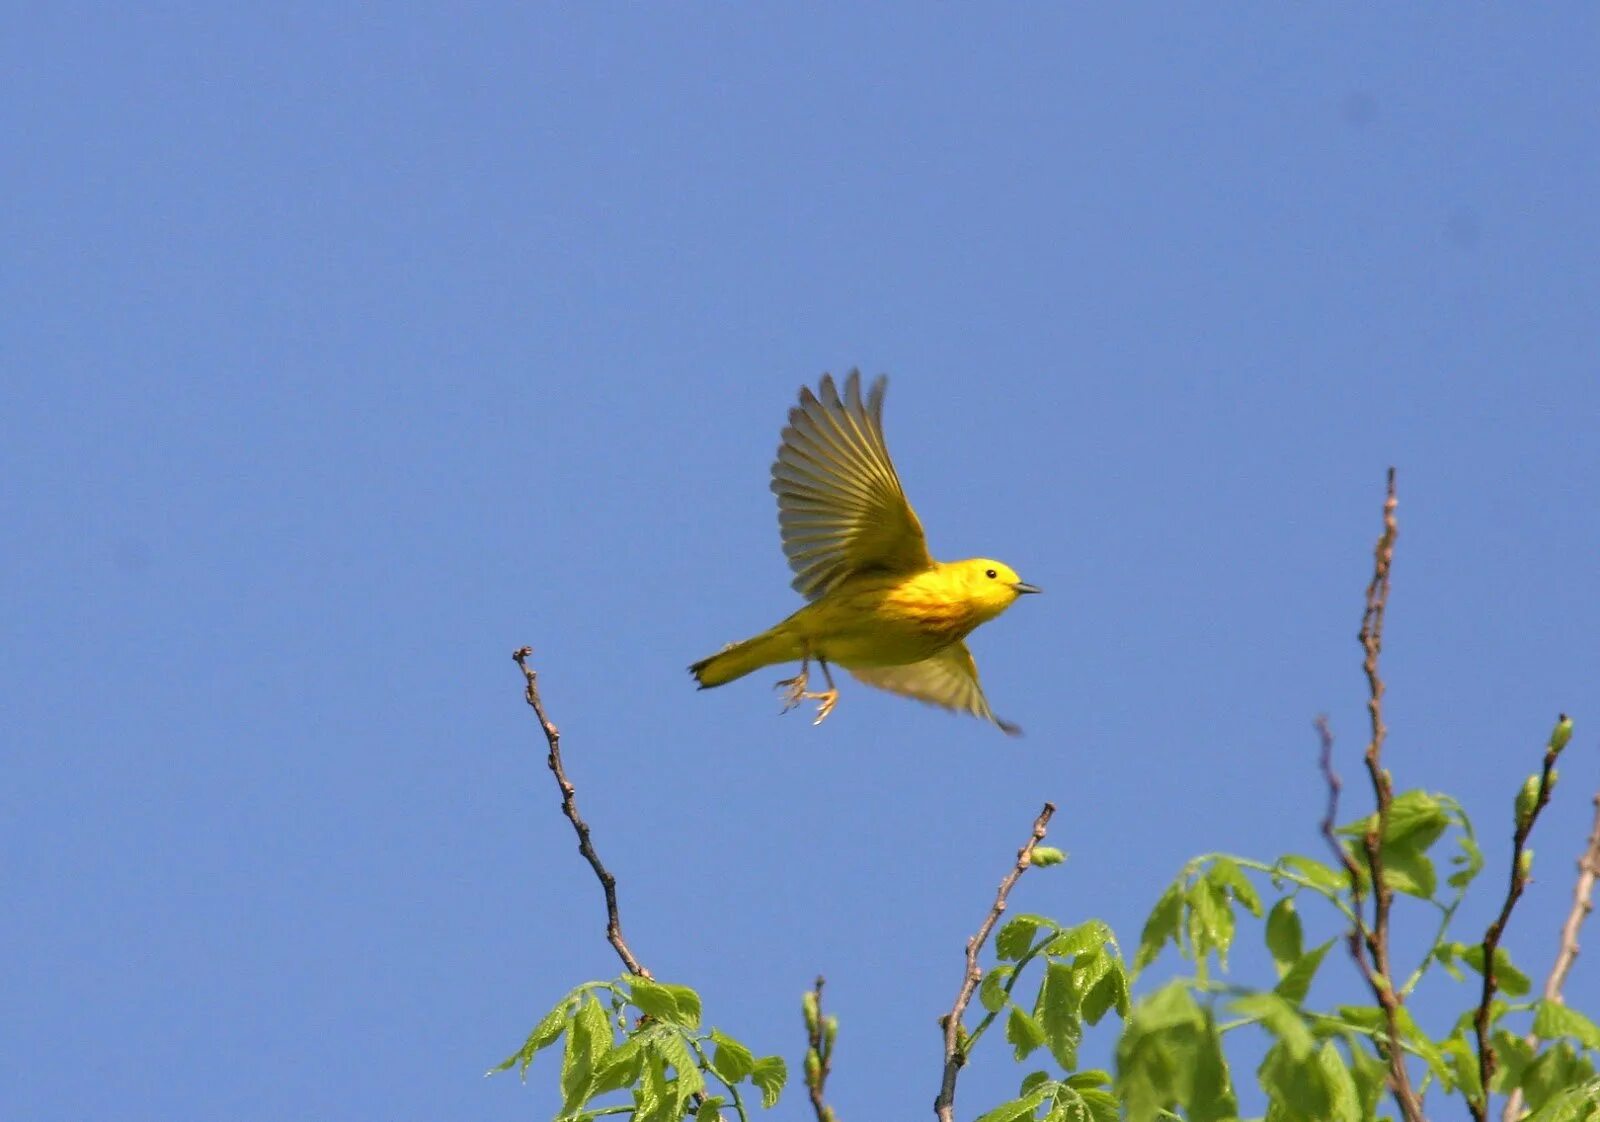 Желтенькая канарейка улетела откуда куда. Желтая птица. Жёлтые птицы в полёте. Желтая птица в полете. Канарейка в полете.